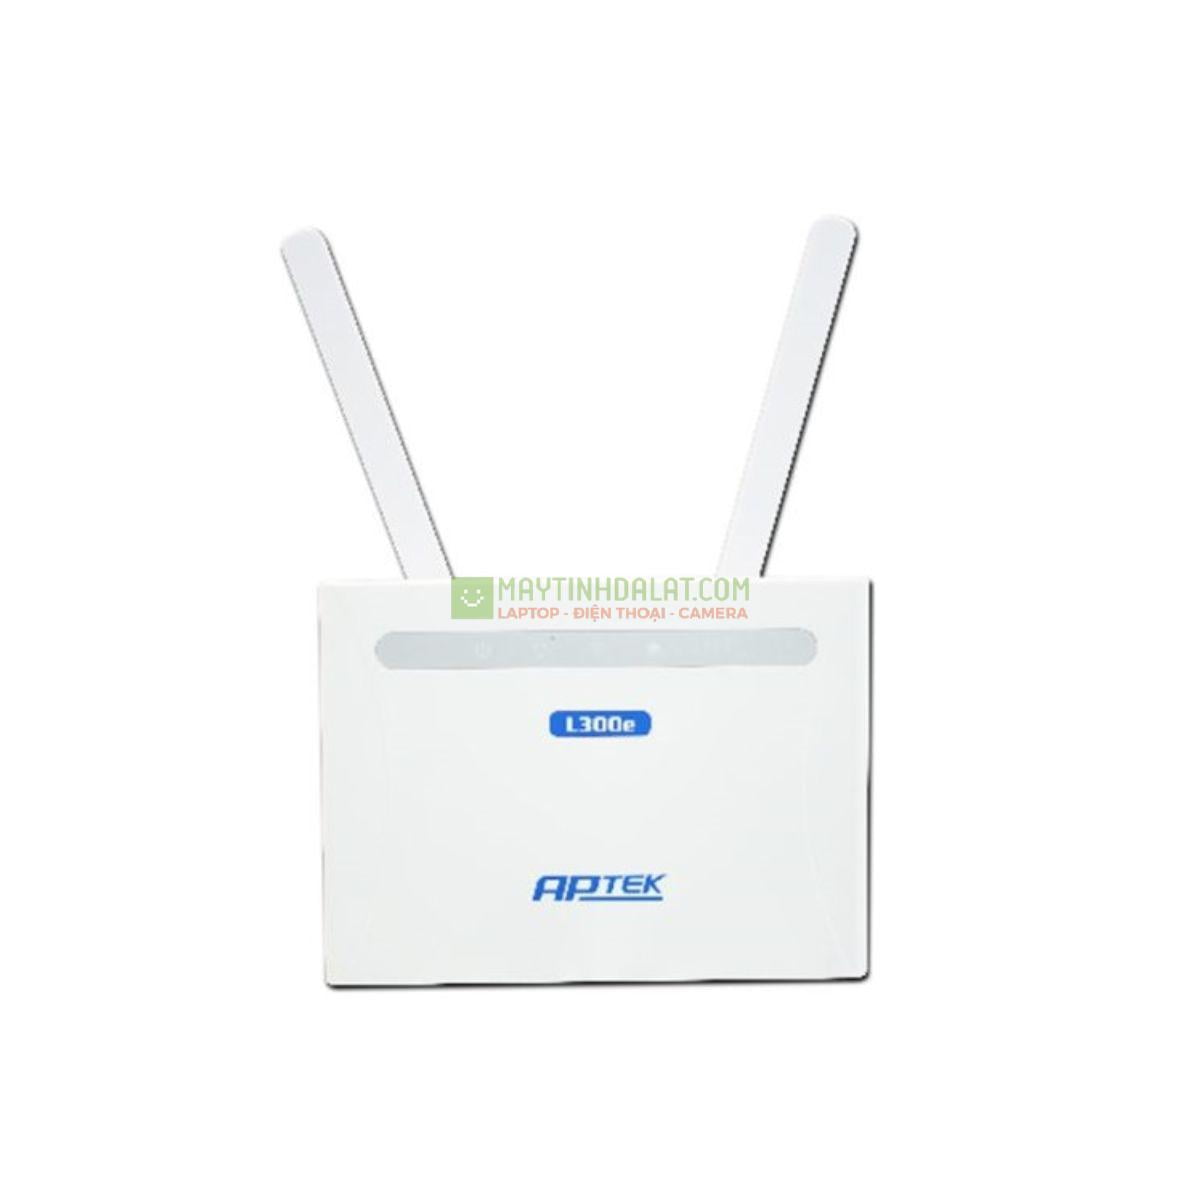 Router wifi 3G/4G gắn sim phát wifi có 2 cổng lan APTEK L300E sử dụng cho camera, gia đình, xe khách